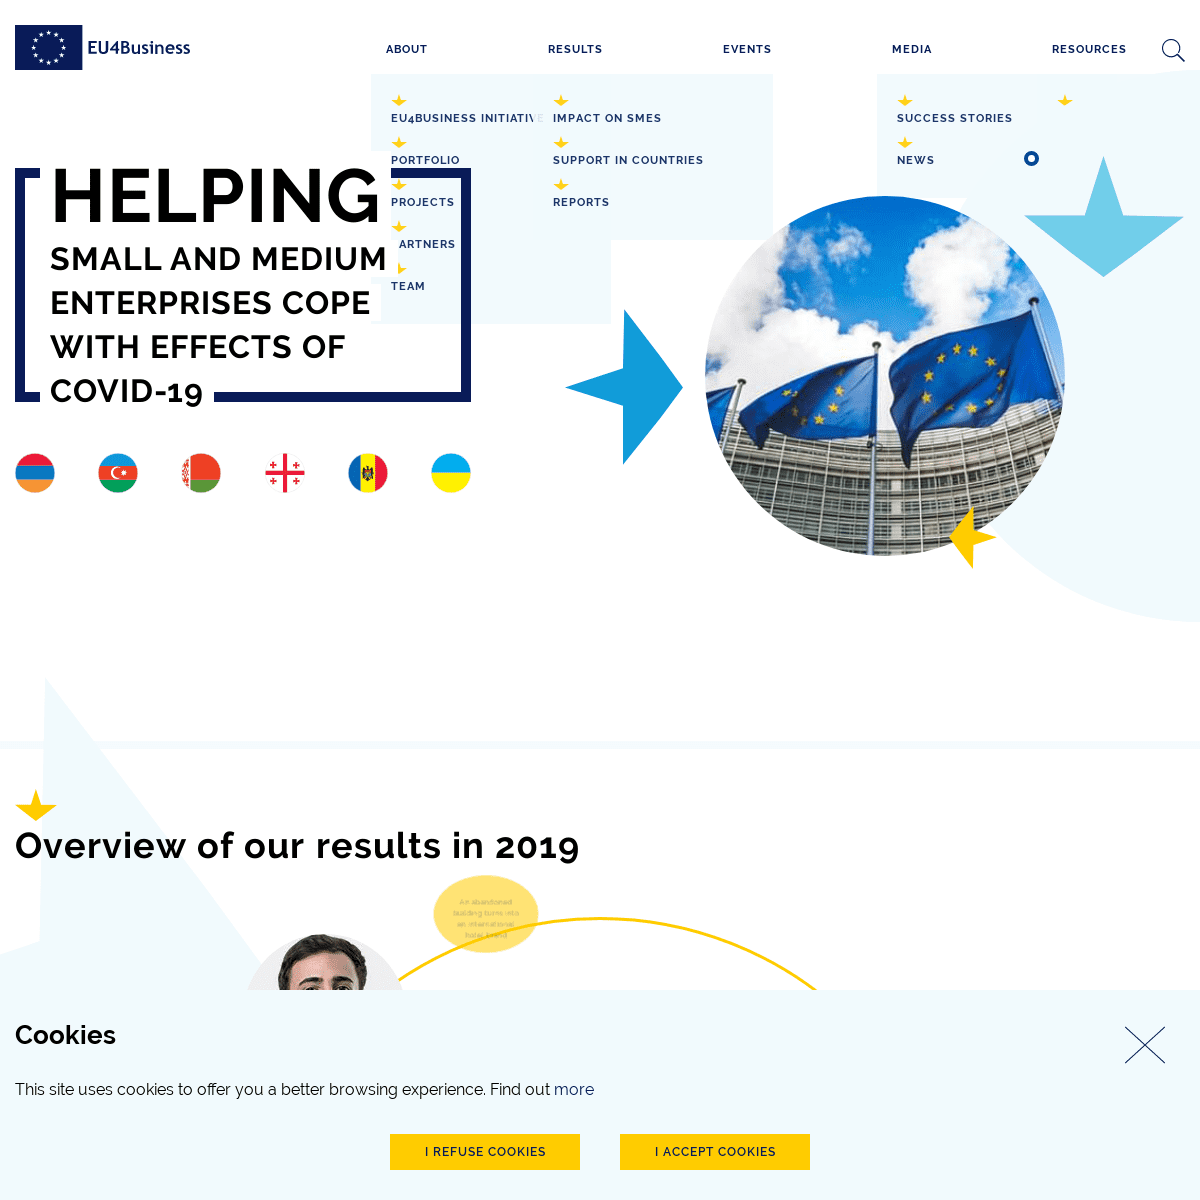 A complete backup of https://eu4business.eu